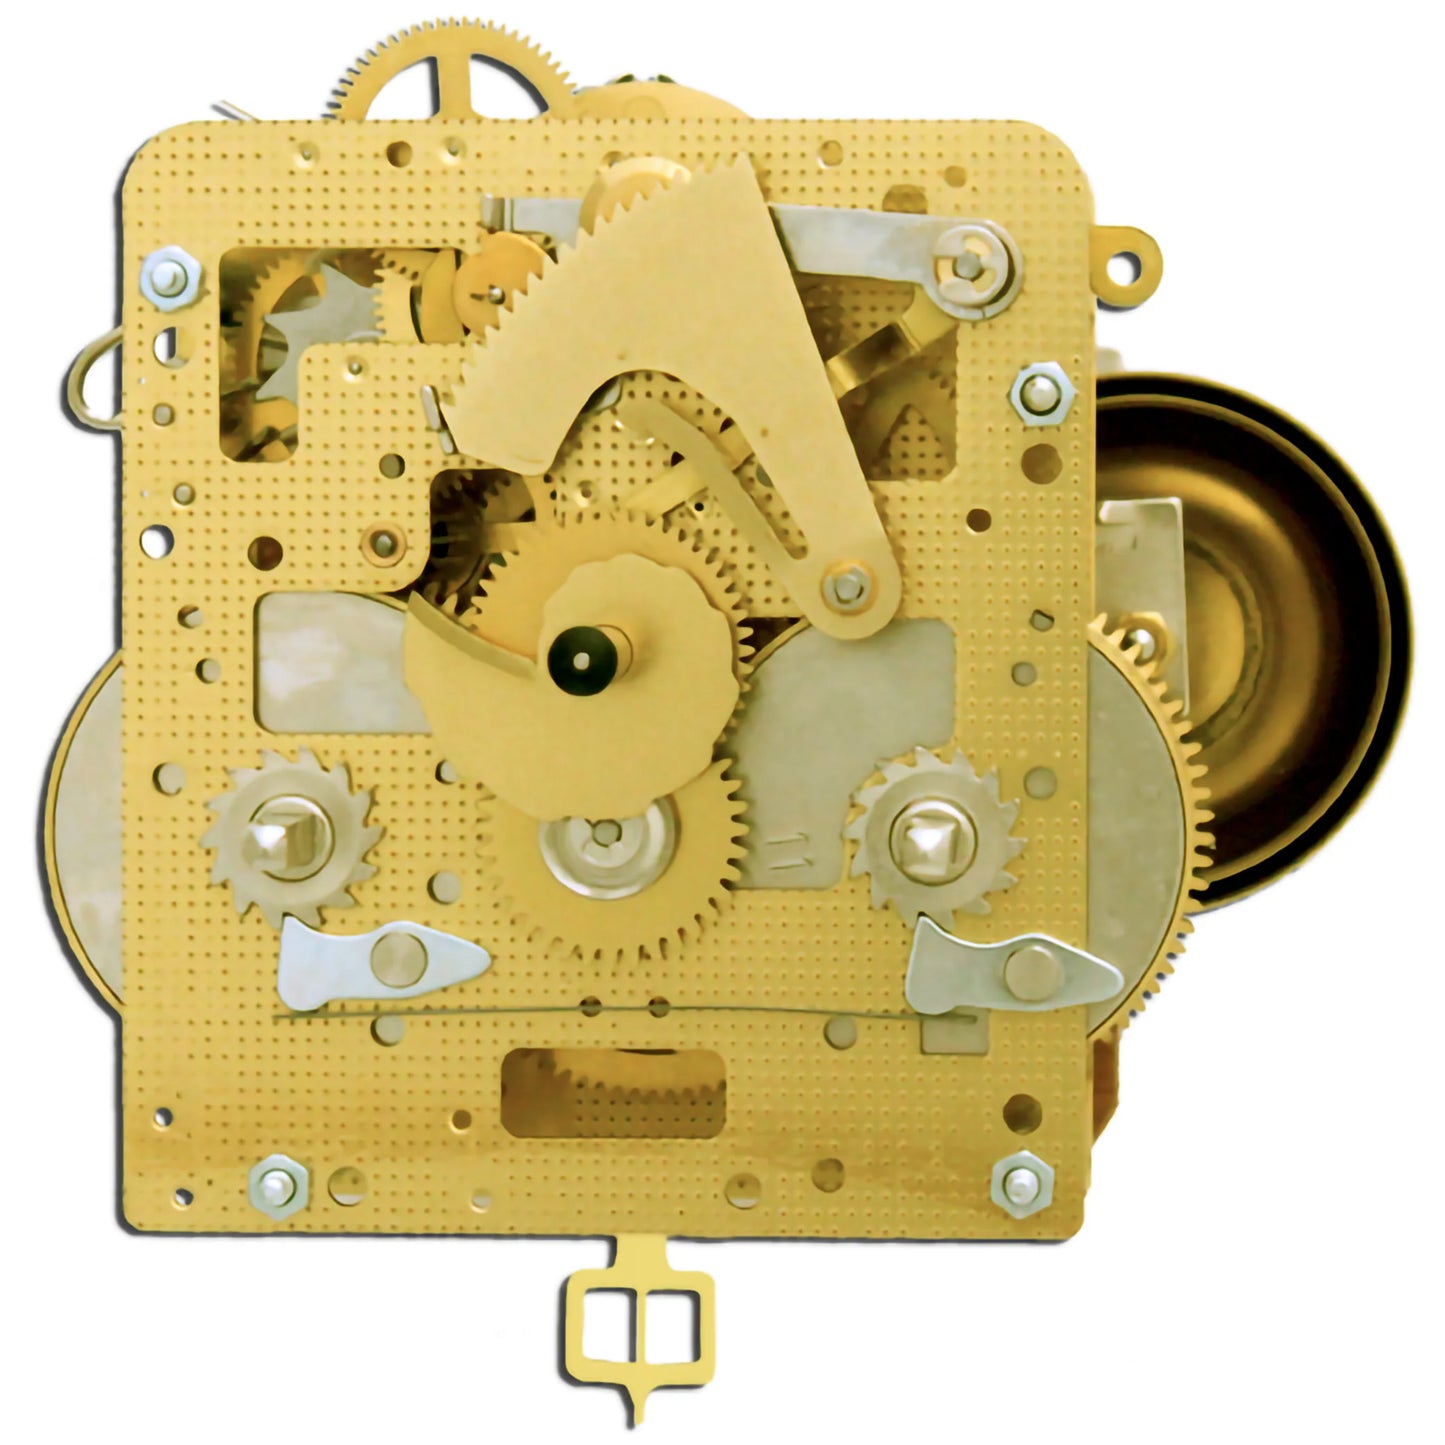 Hermle 141-070 Half-Hour Strike Mechanical Wall / Mantel Clock Movement with 2 Bells